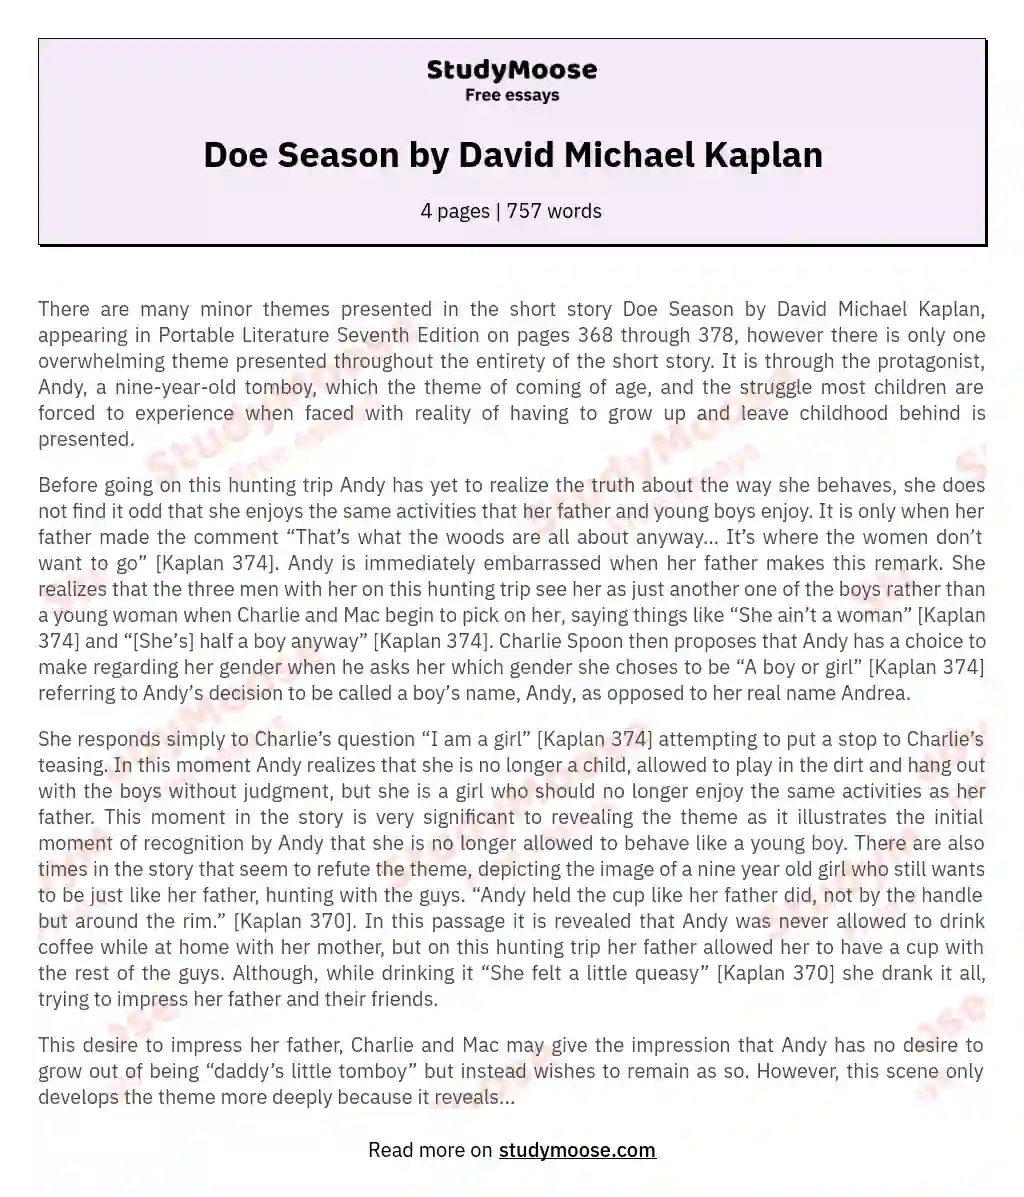 Doe Season by David Michael Kaplan essay